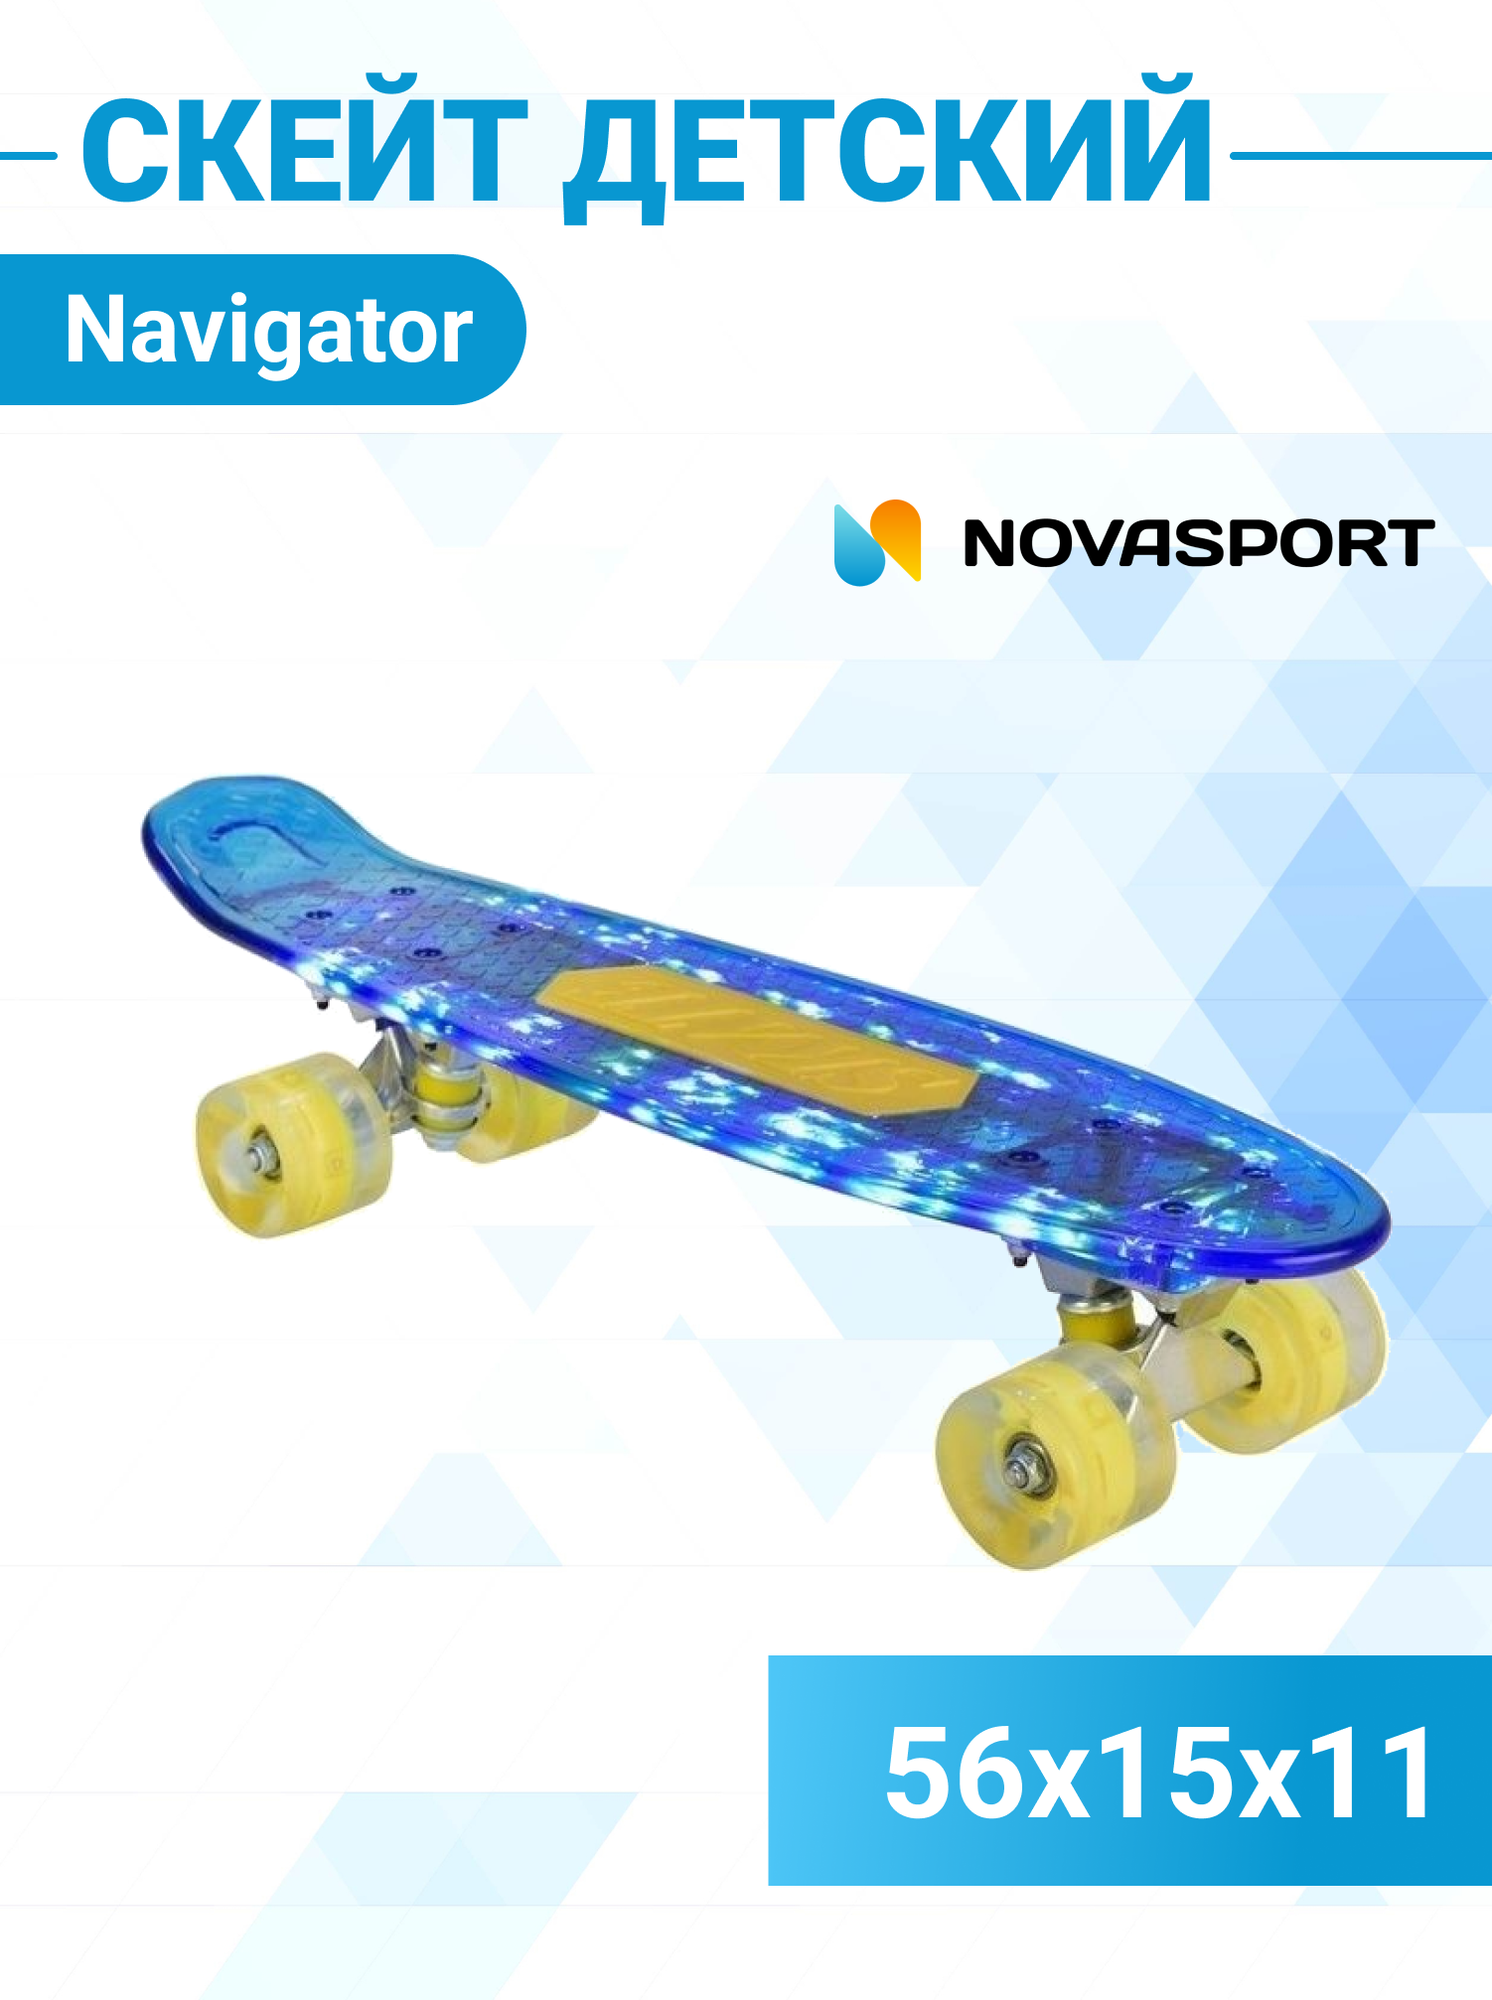 Скейт детский Navigator пластик, 56х15х11 см со световыми эффектами Т20014-15 Синий Т20013